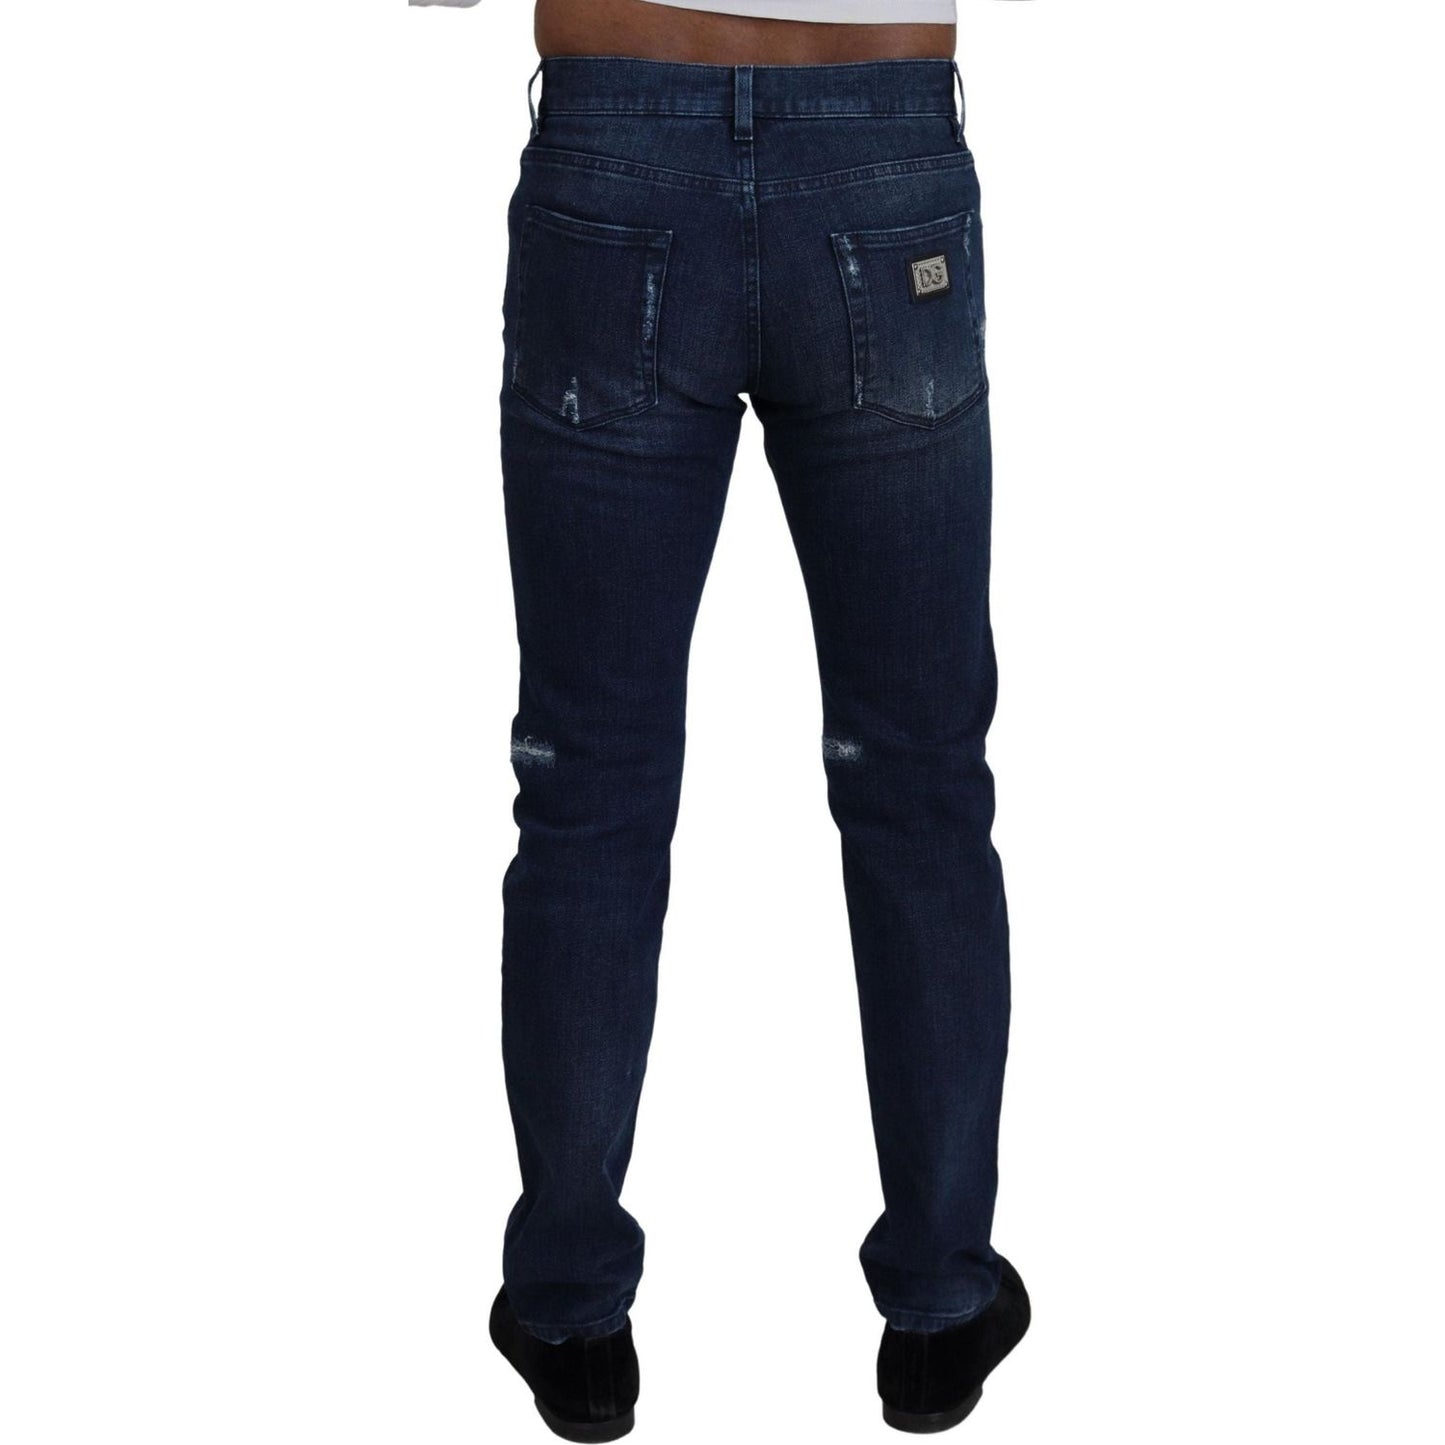 Dolce & Gabbana Stunning Mainline Denim Jeans blue-cotton-skinny-tattered-denim-jeans